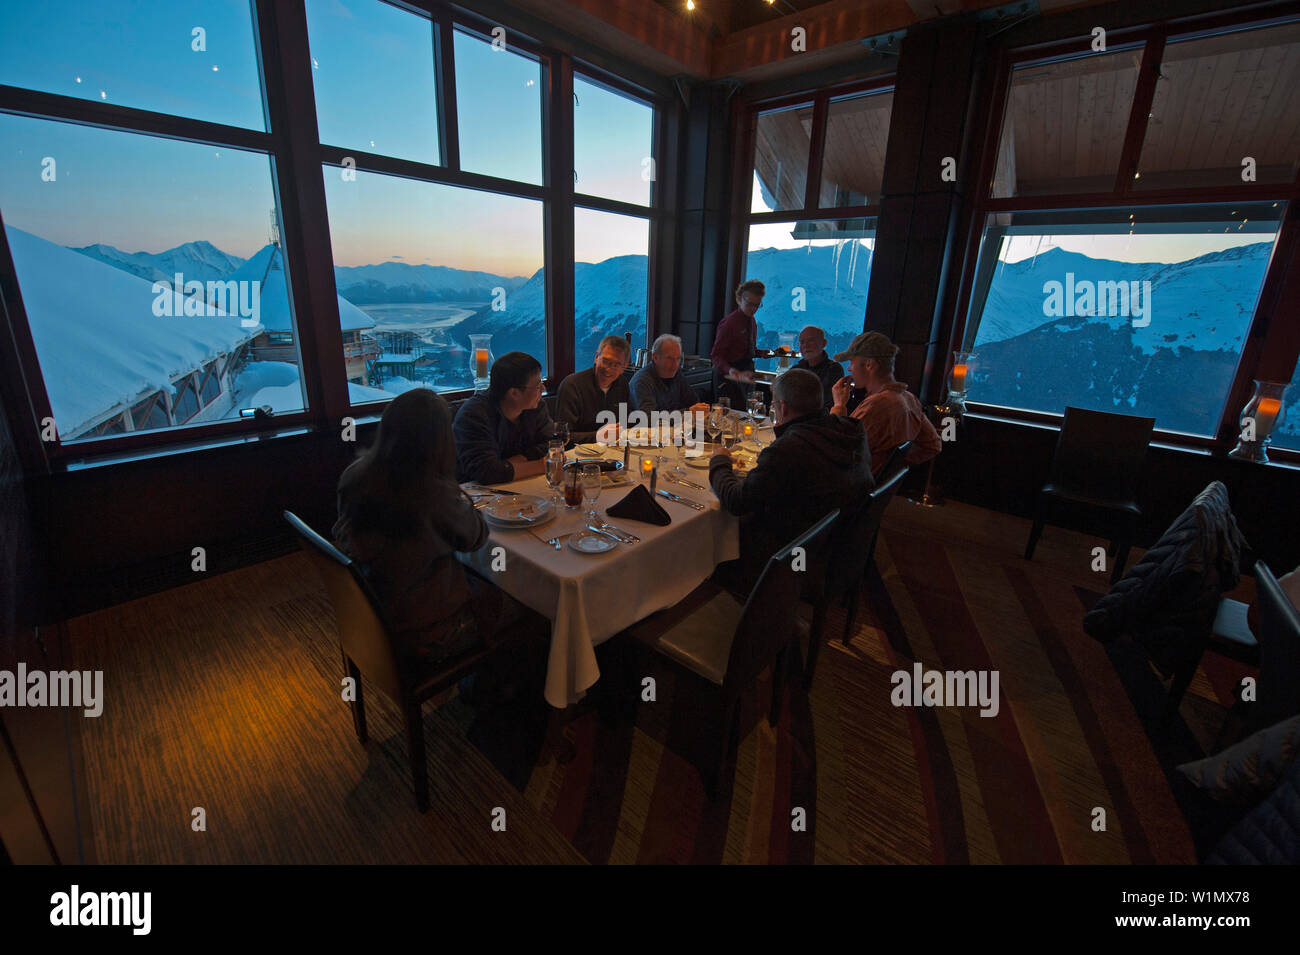 Group of people having dinner in a restaurant, Alyeska Resort, Girdwood, Alaska, USA Stock Photo